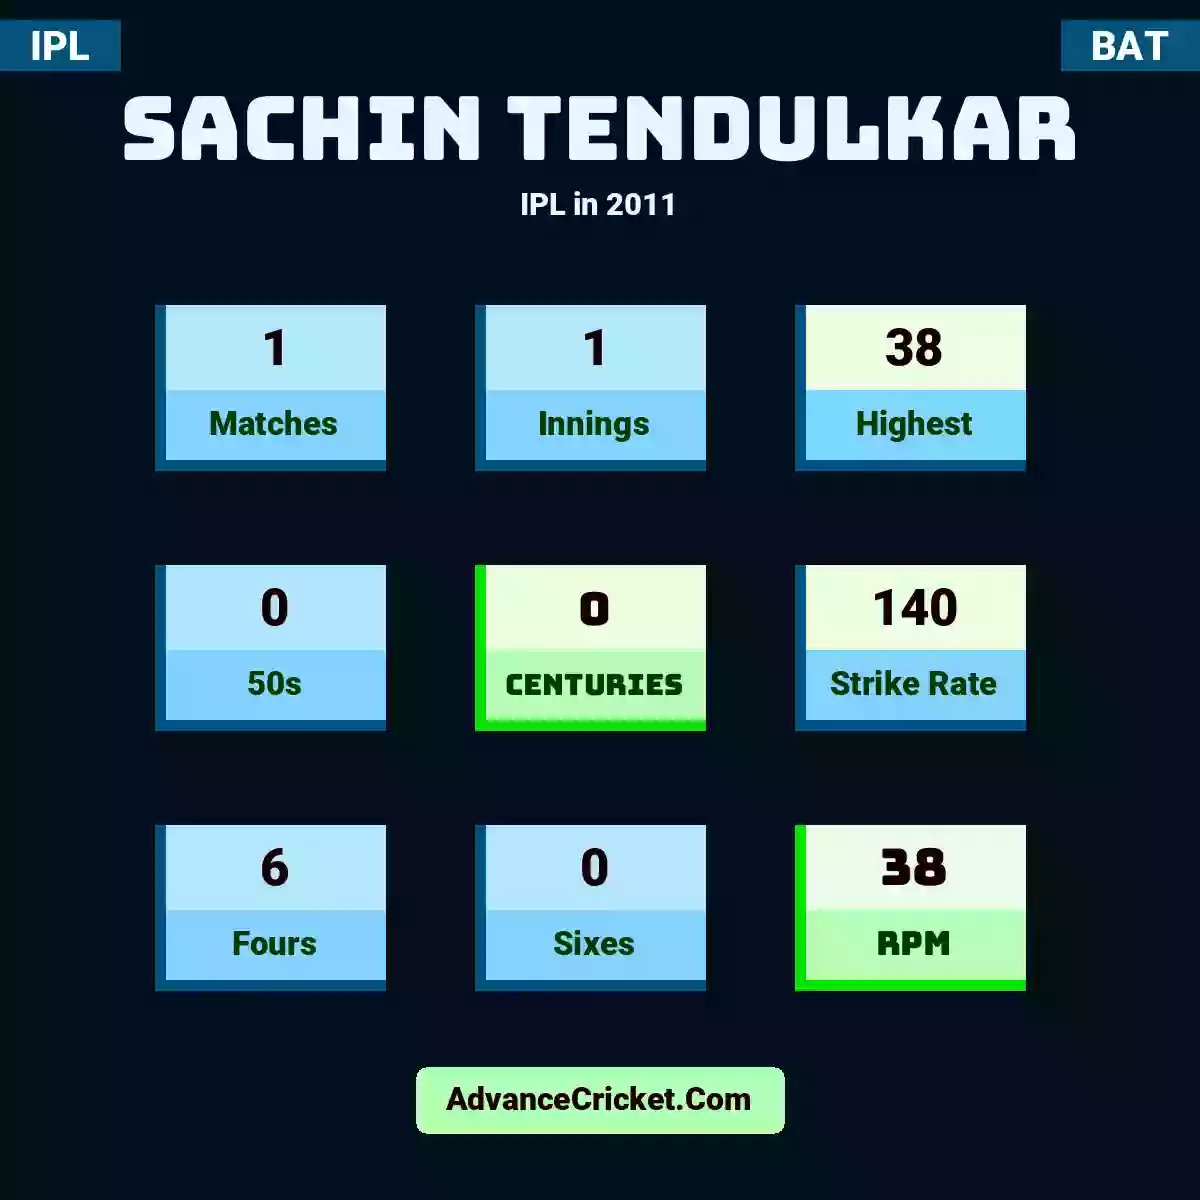 Sachin Tendulkar IPL  in 2011, Sachin Tendulkar played 16 matches, scored 100 runs as highest, 2 half-centuries, and 1 centuries, with a strike rate of 113. S.Tendulkar hit 67 fours and 5 sixes, with an RPM of 34.